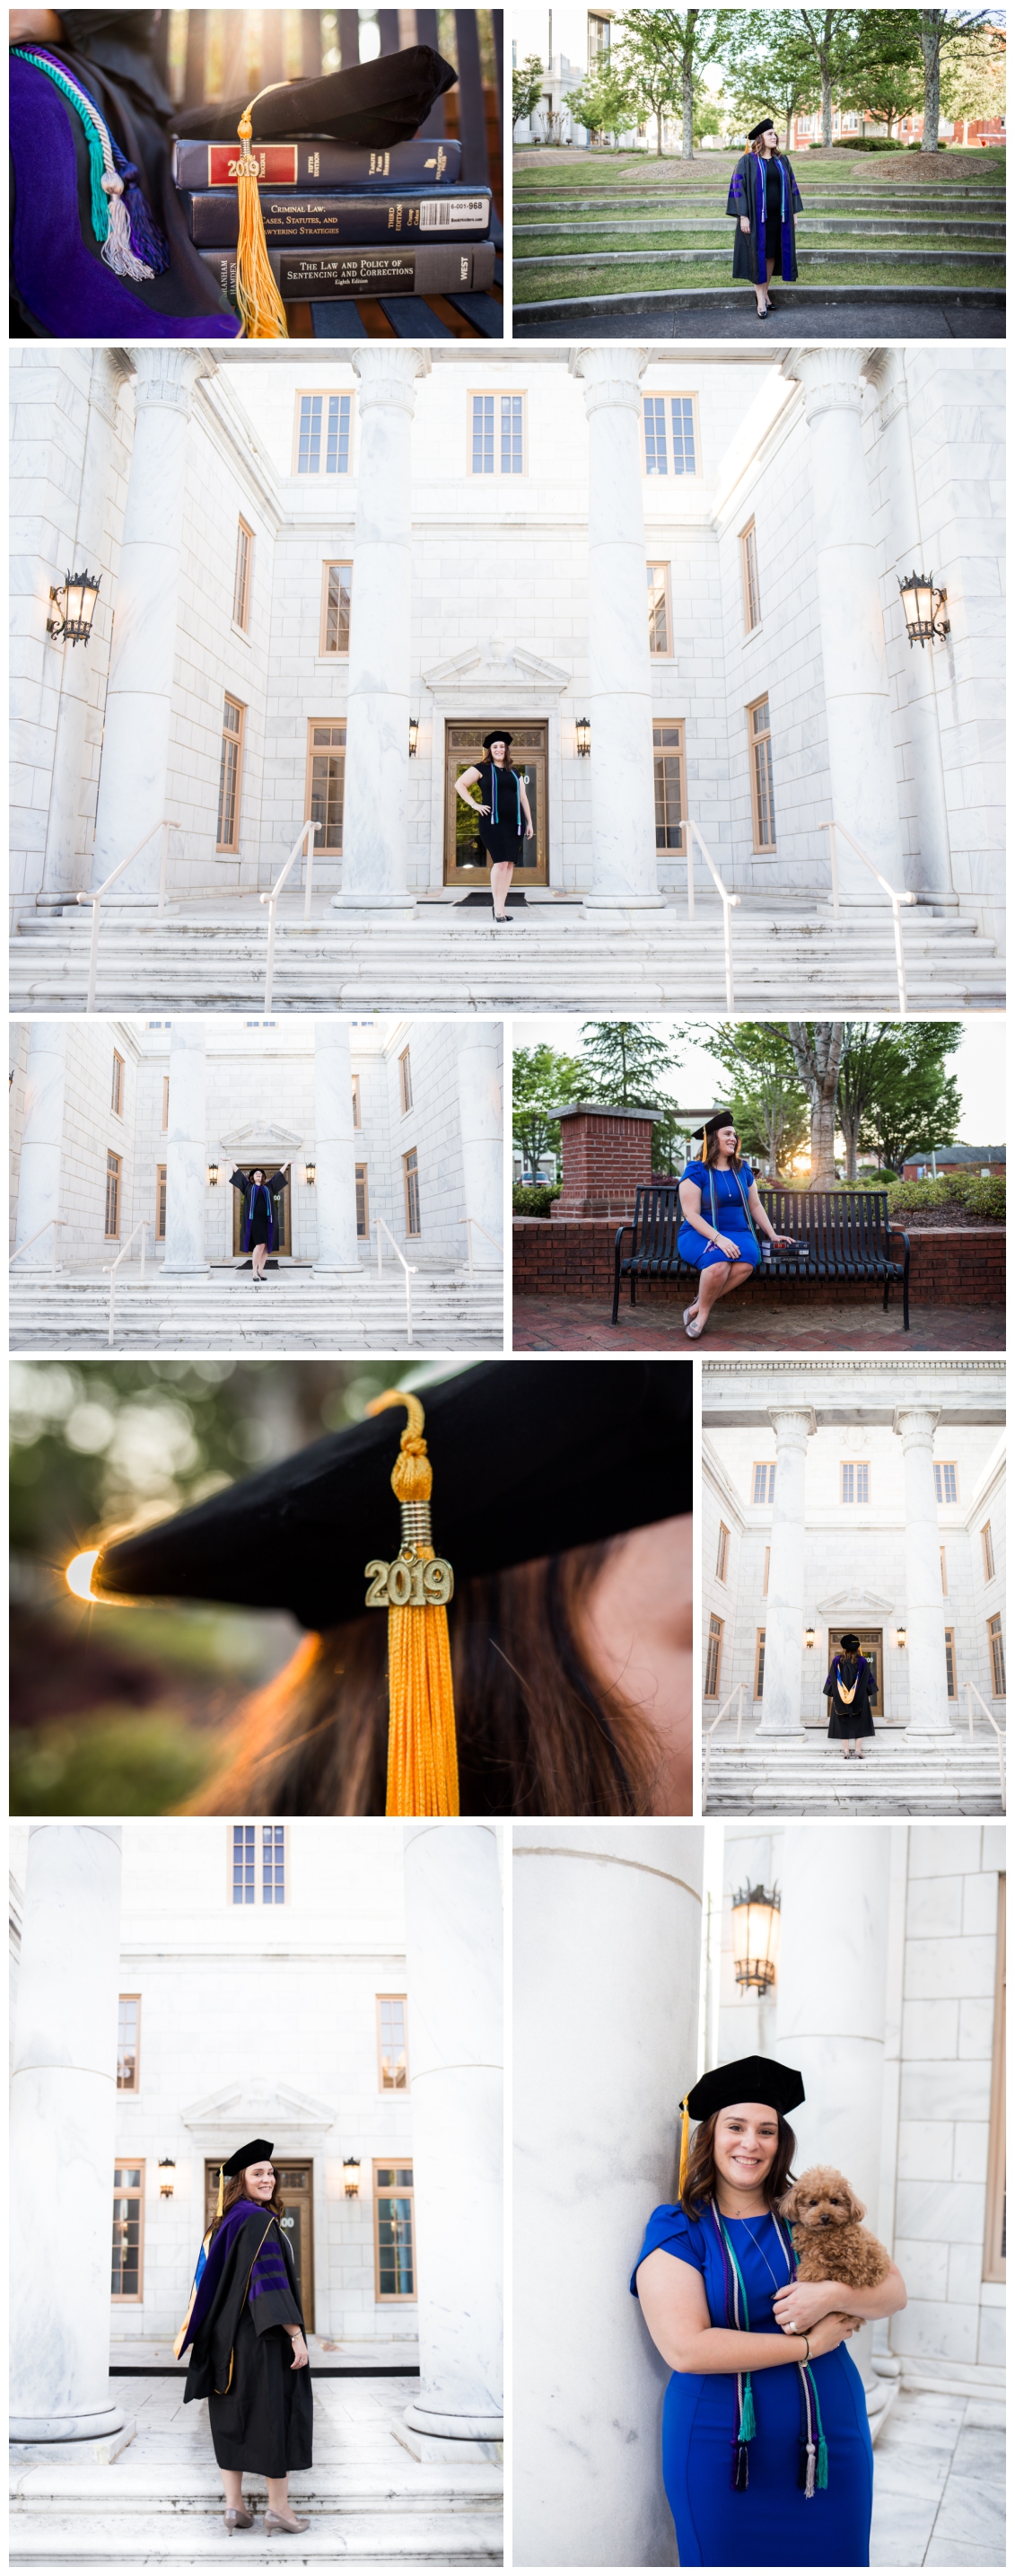 Christine Quarte Photography - Graduation portrait